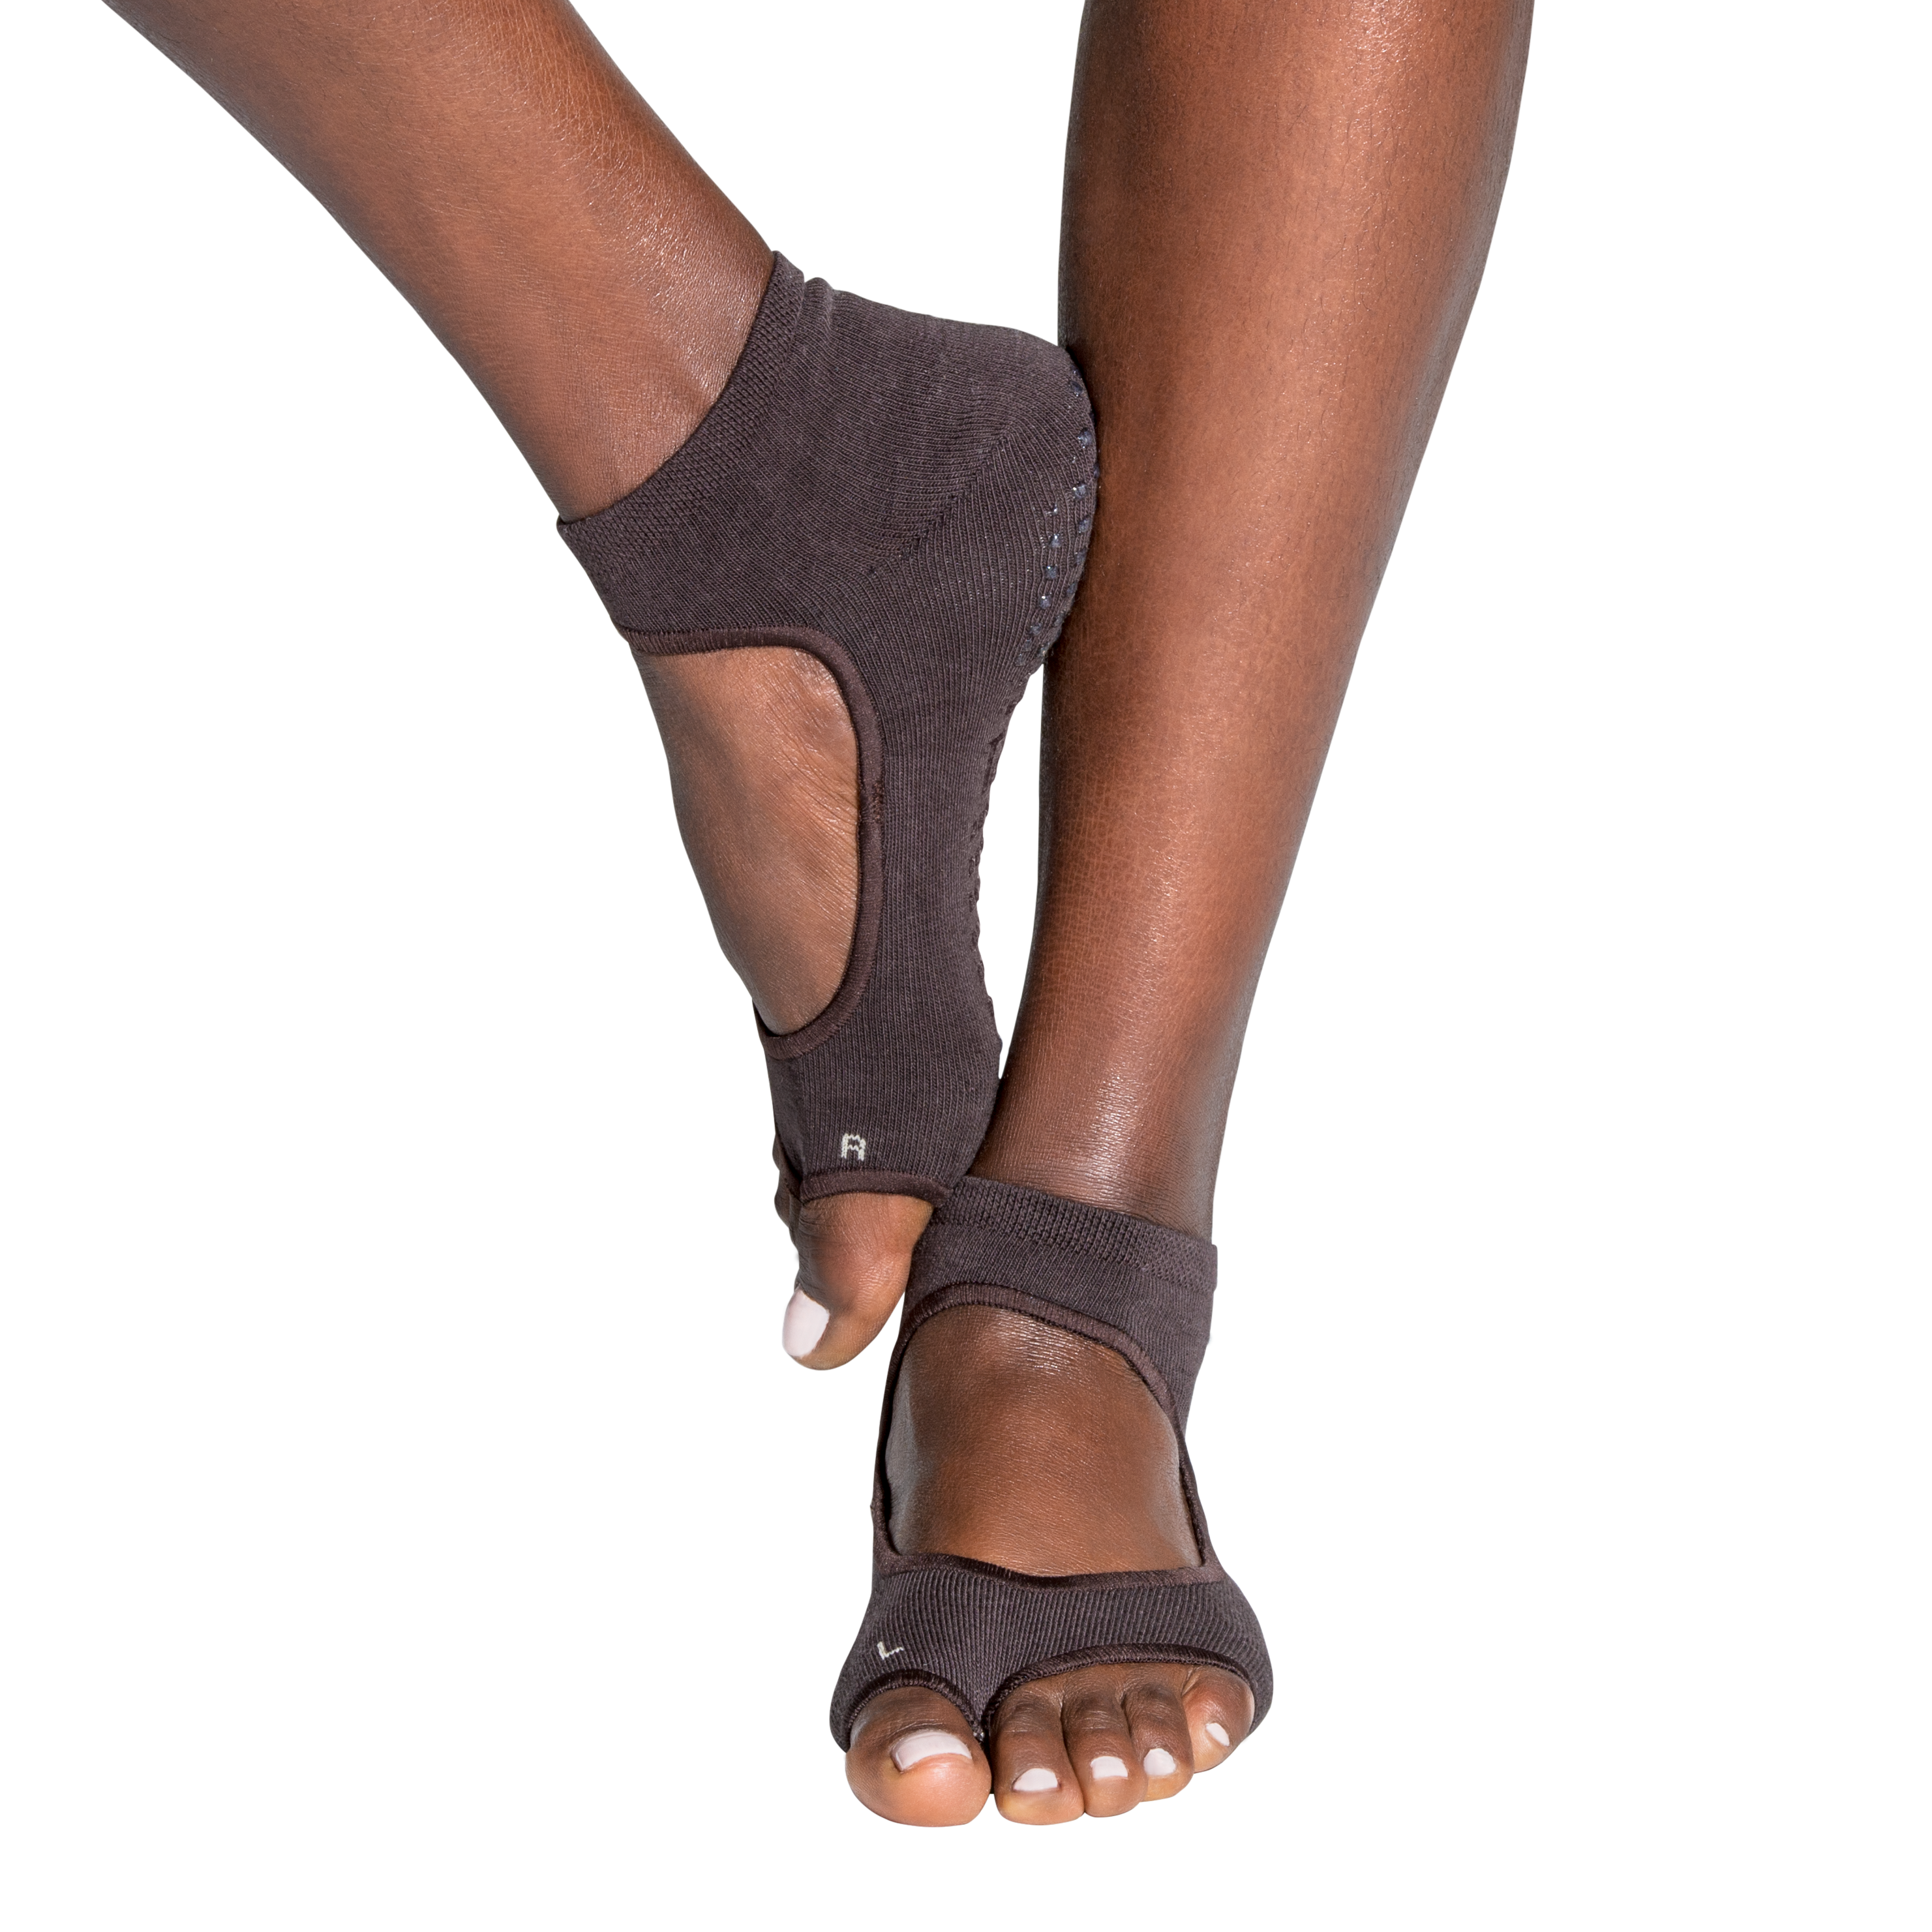 Tucketts Allegro Toeless Non-Slip Grip Socks, Made in Colombia